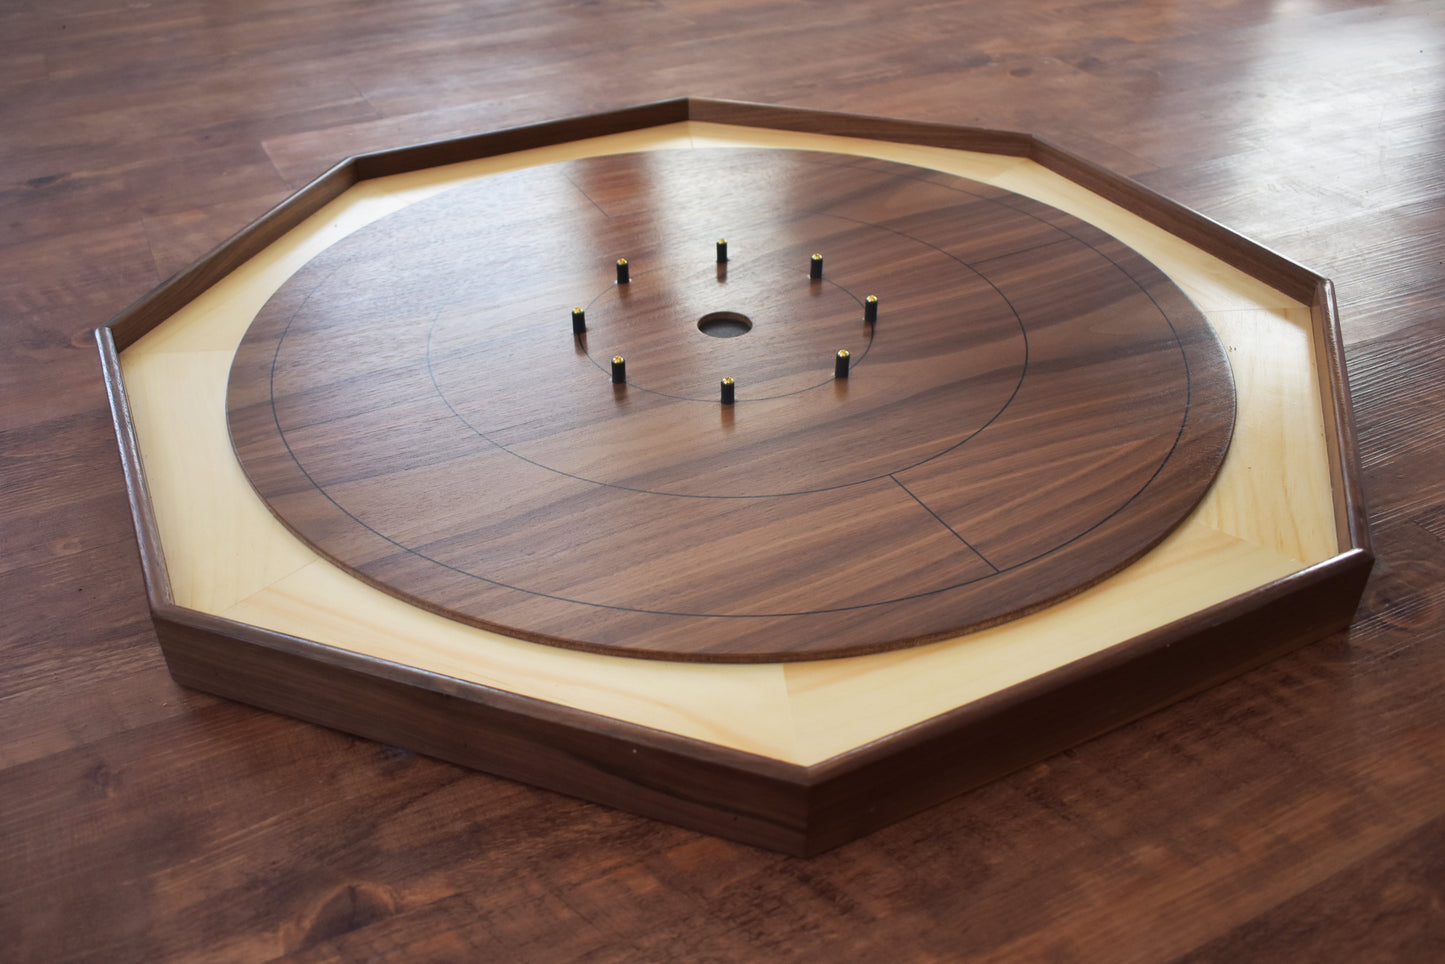 The Walnut Wonder - Small Traditional Style Crokinole Board Game Set